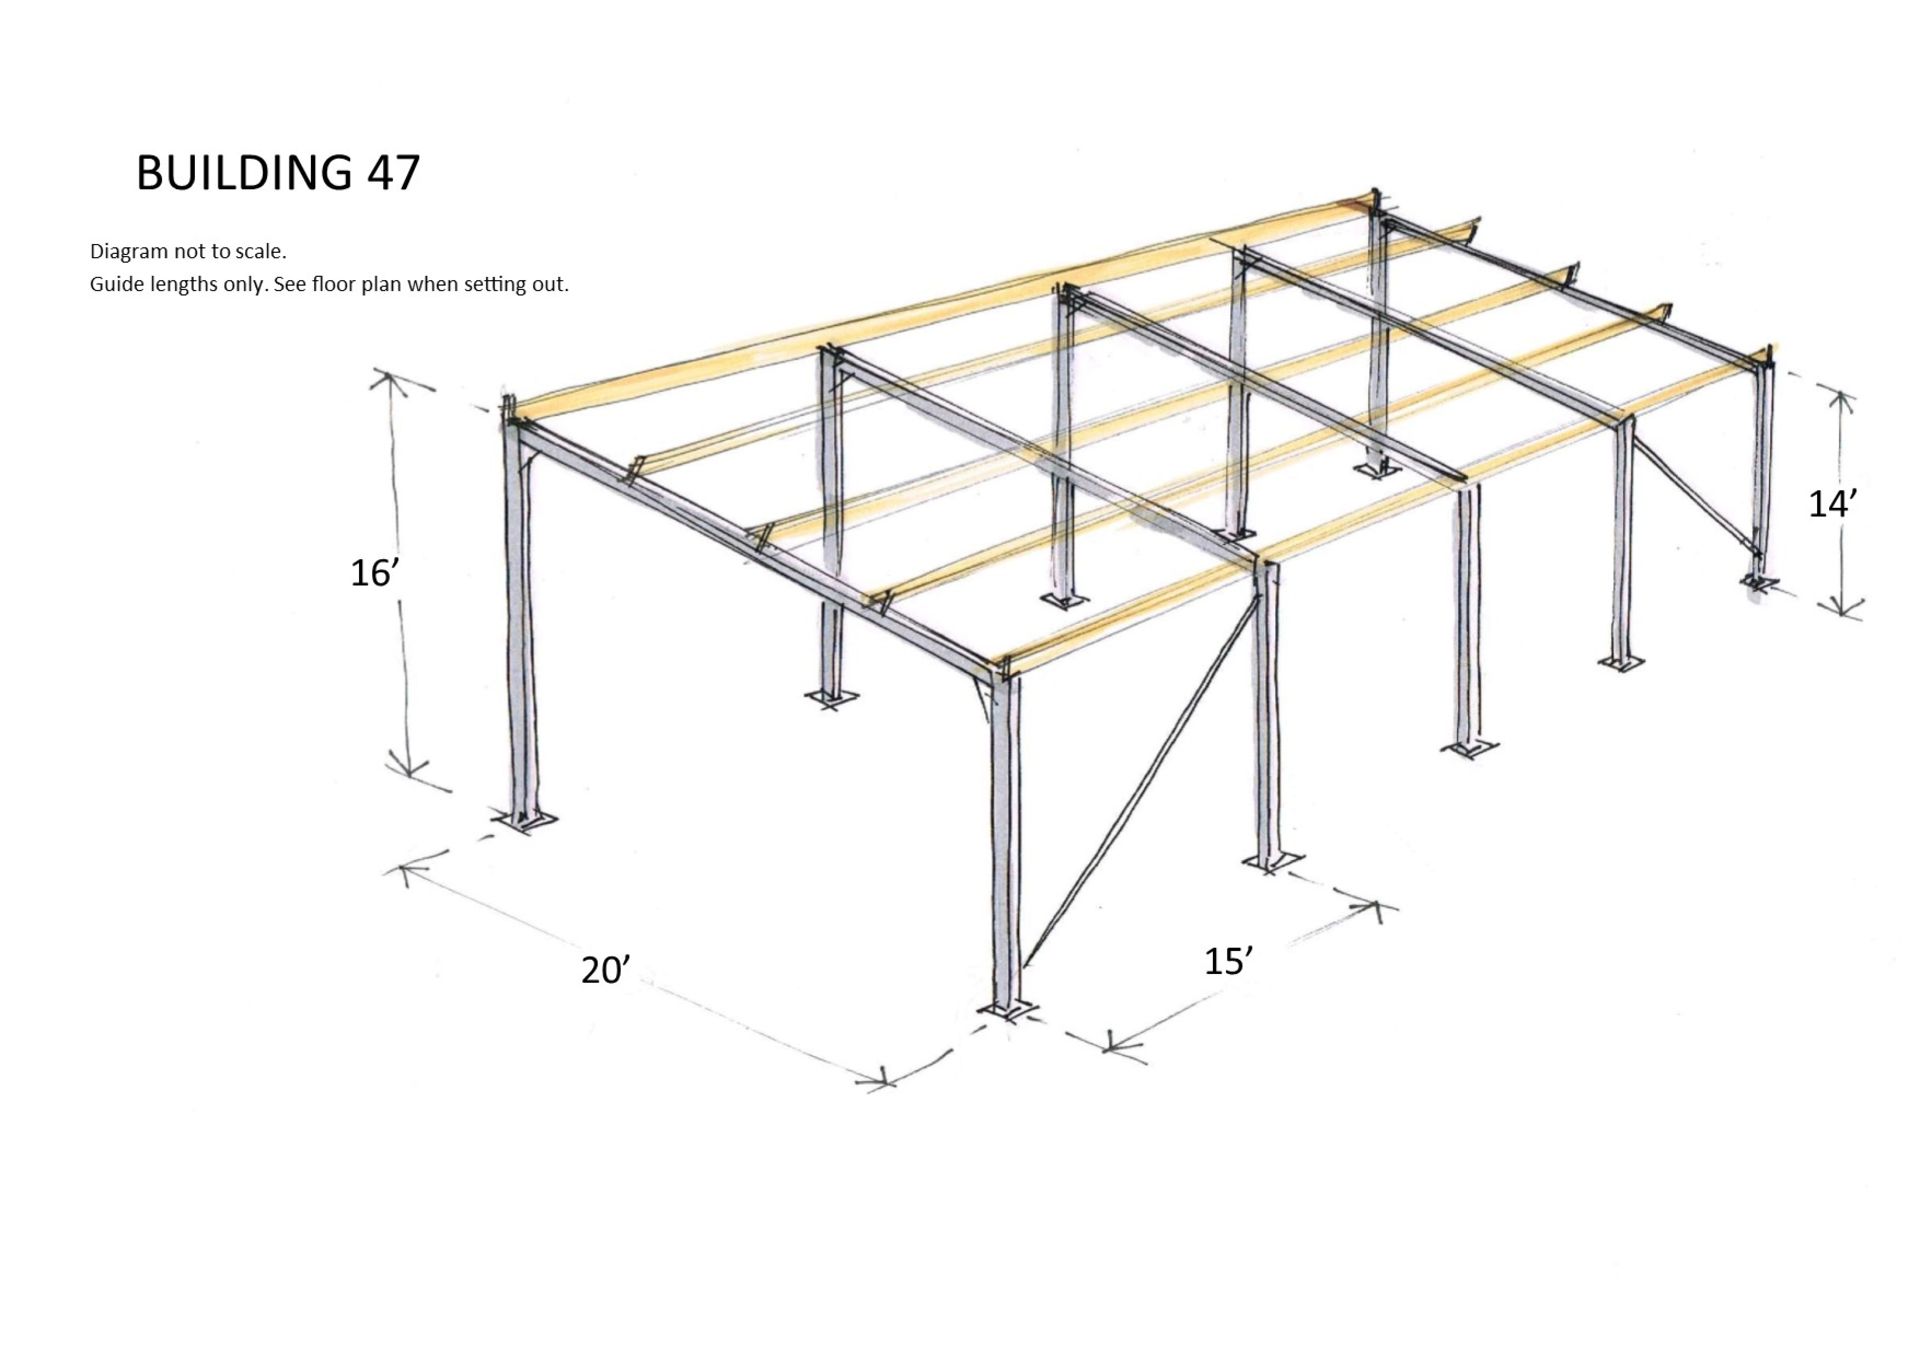 Steel framed building mono slope 60ft long x 20ft wide x 16ft @ front x 14ft @back 6 deg roof pitch - Image 8 of 9